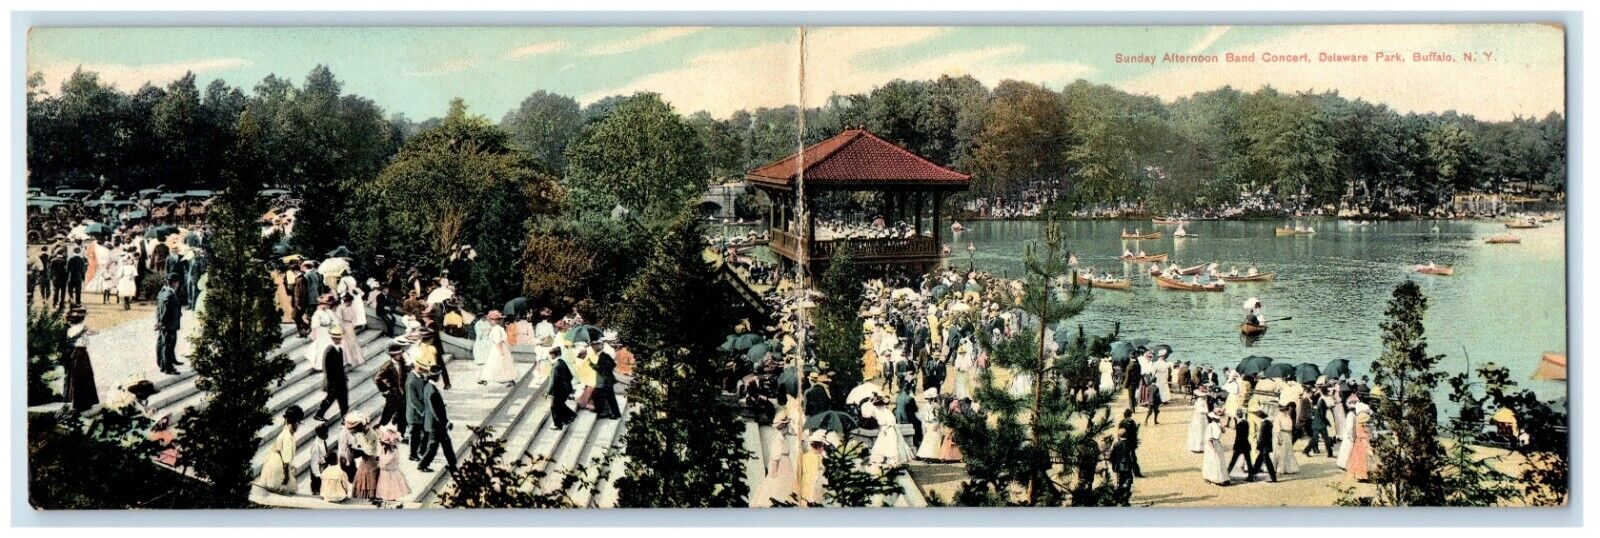 c1905 Panorama Fold Out Band Concert Delaware Park Buffalo New York NY Postcard